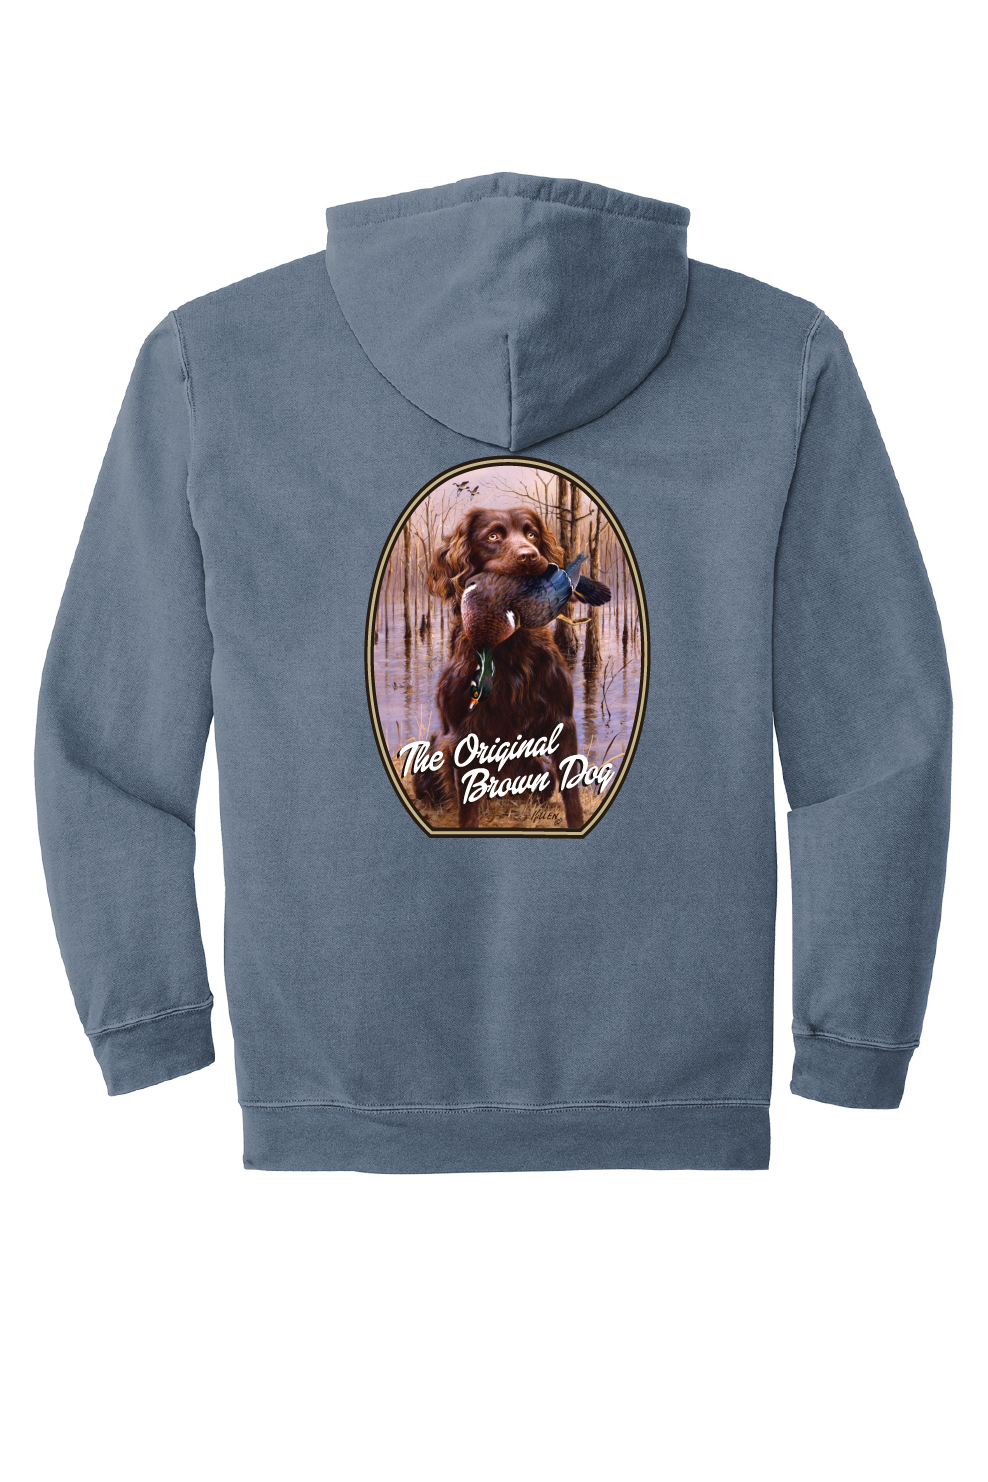 Top Dog - Boykin Spaniel Comfort Colors Hooded Sweatshirt